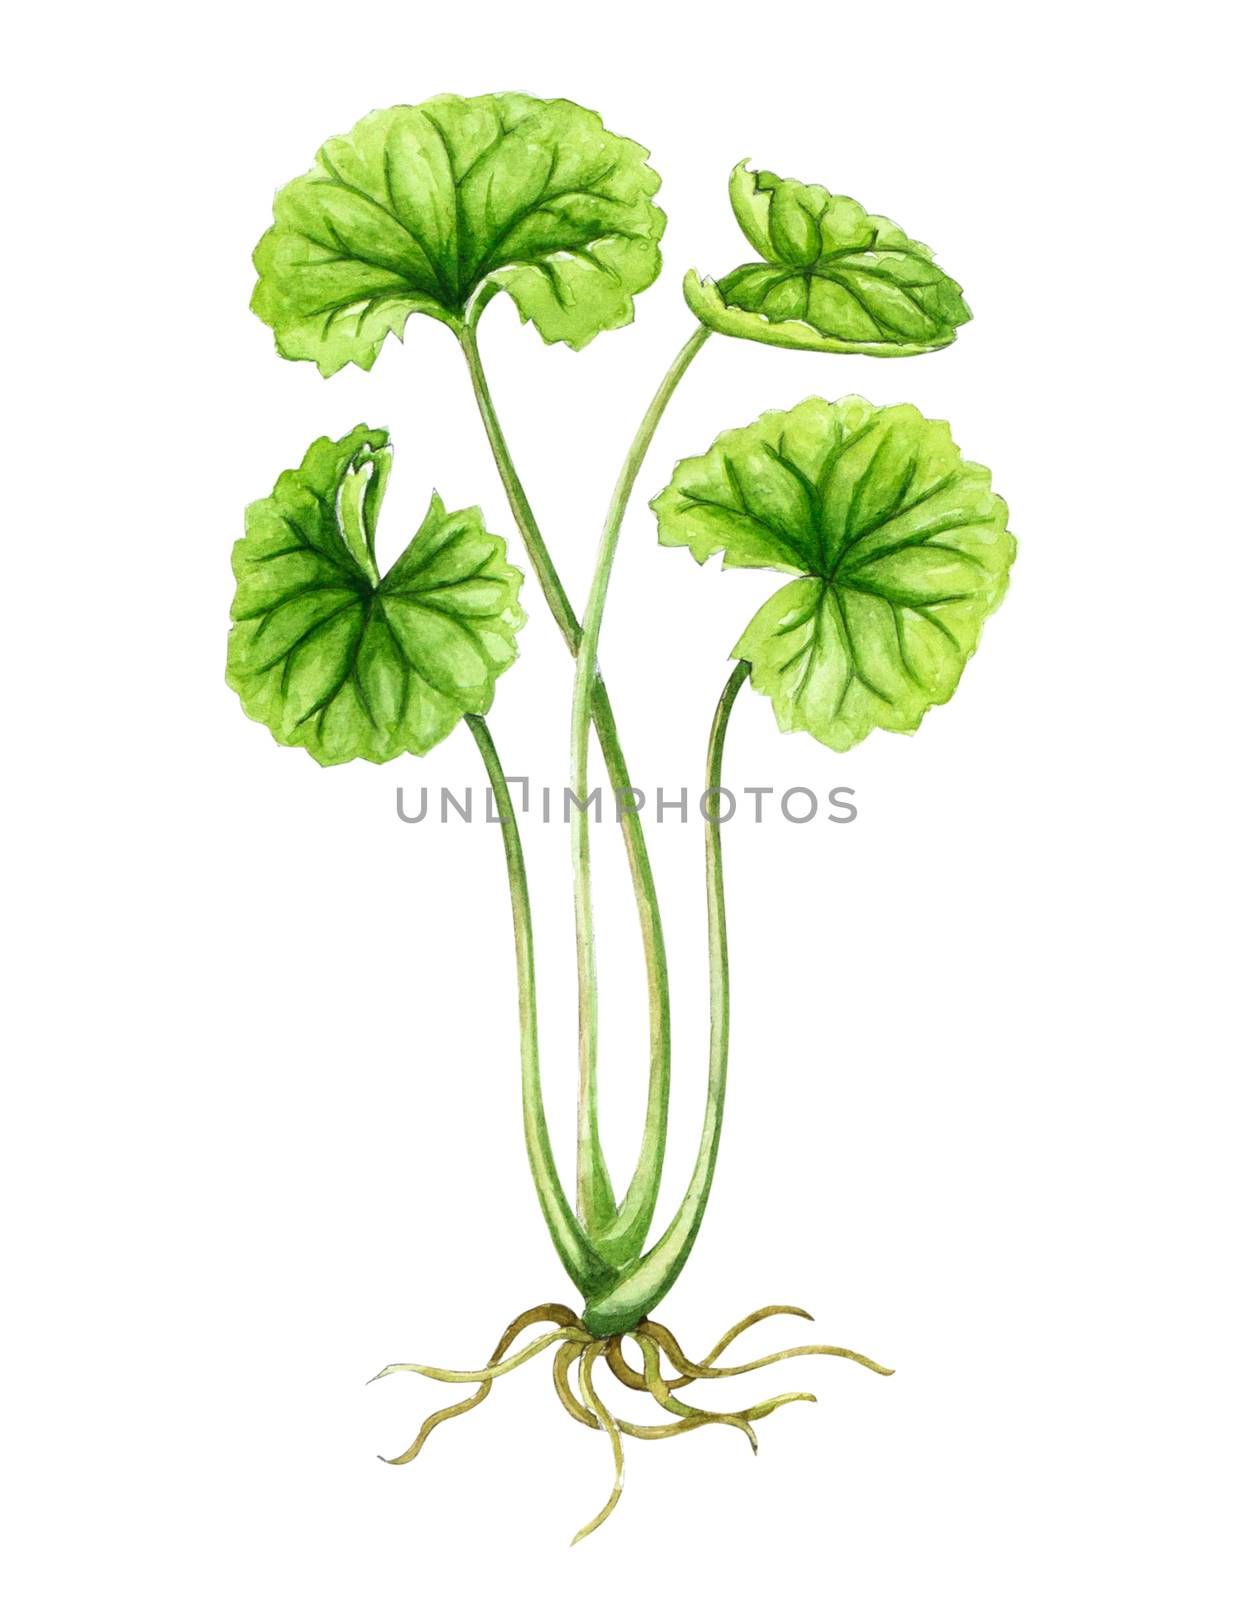 Gotu kola leaf watercolor illustration on white background, heal by pt.pongsak@gmail.com